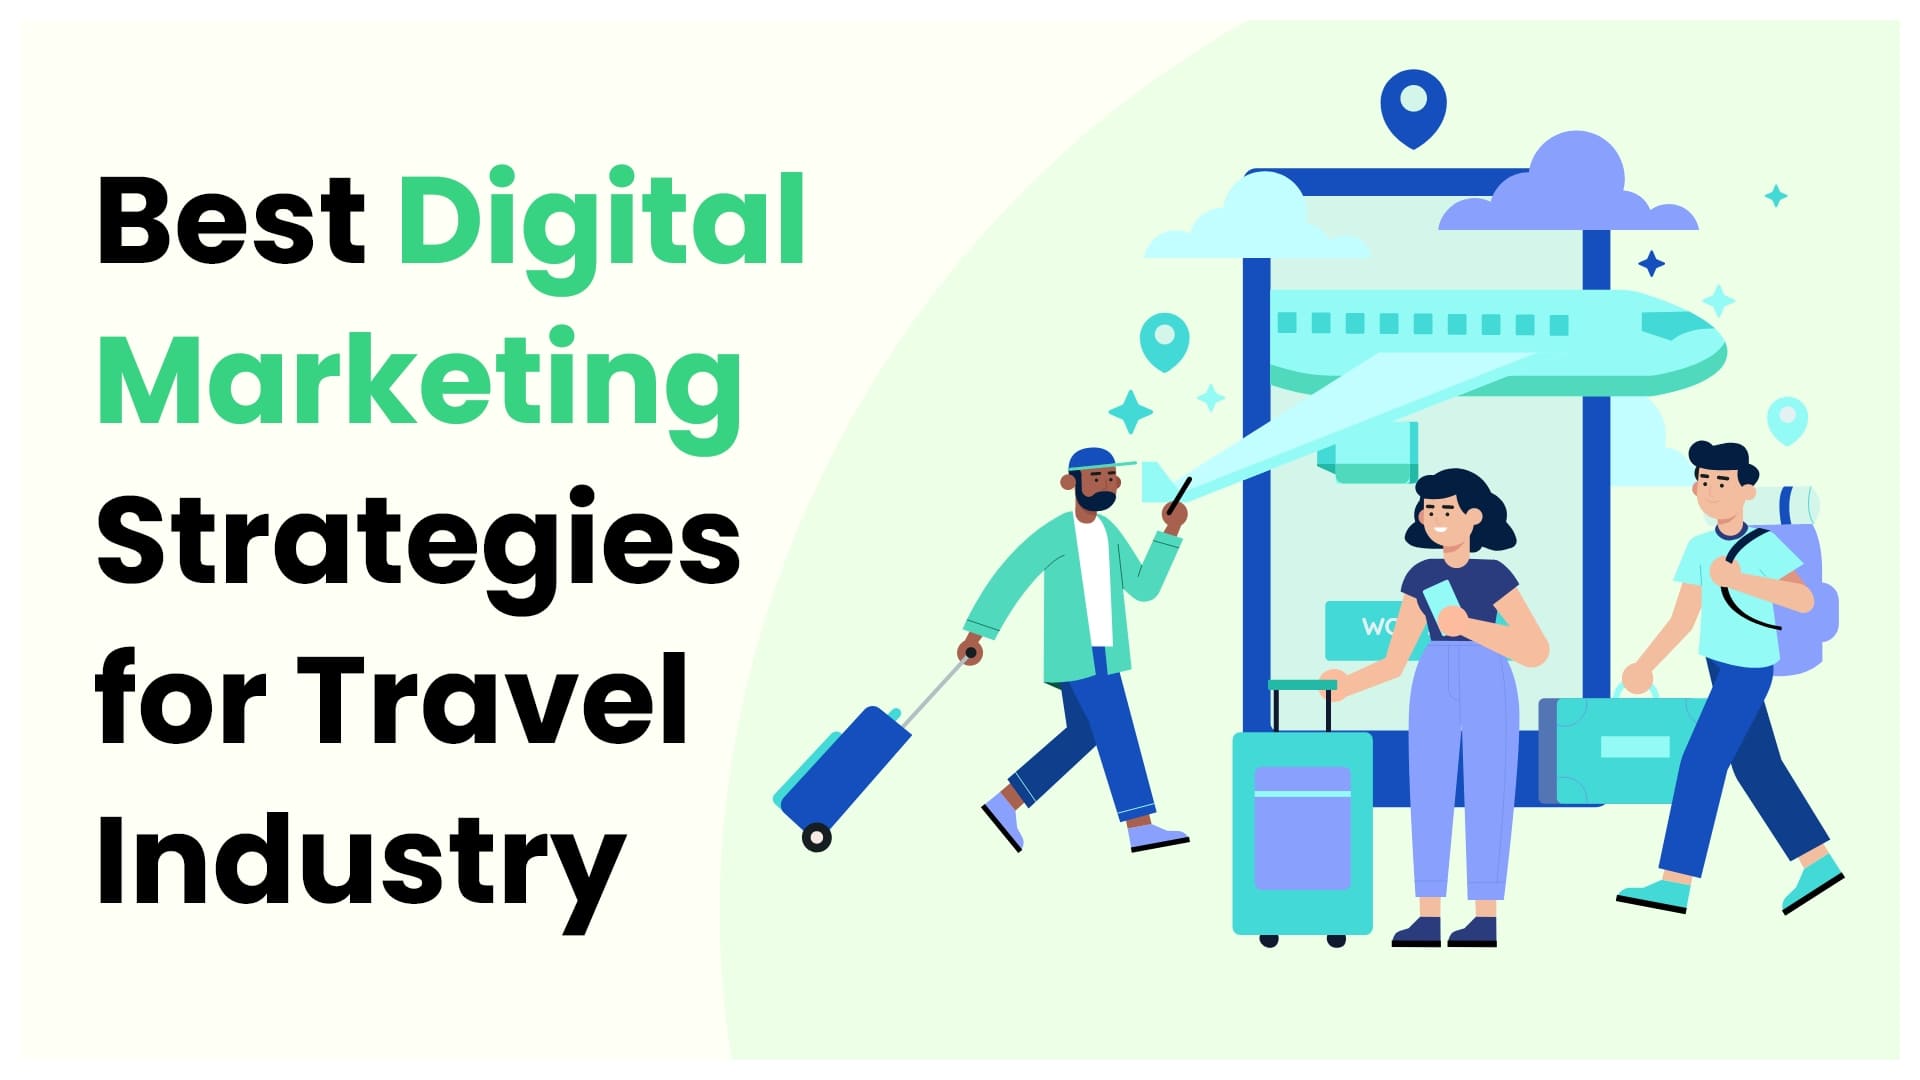 Digital Marketing Strategies for Travel Industry